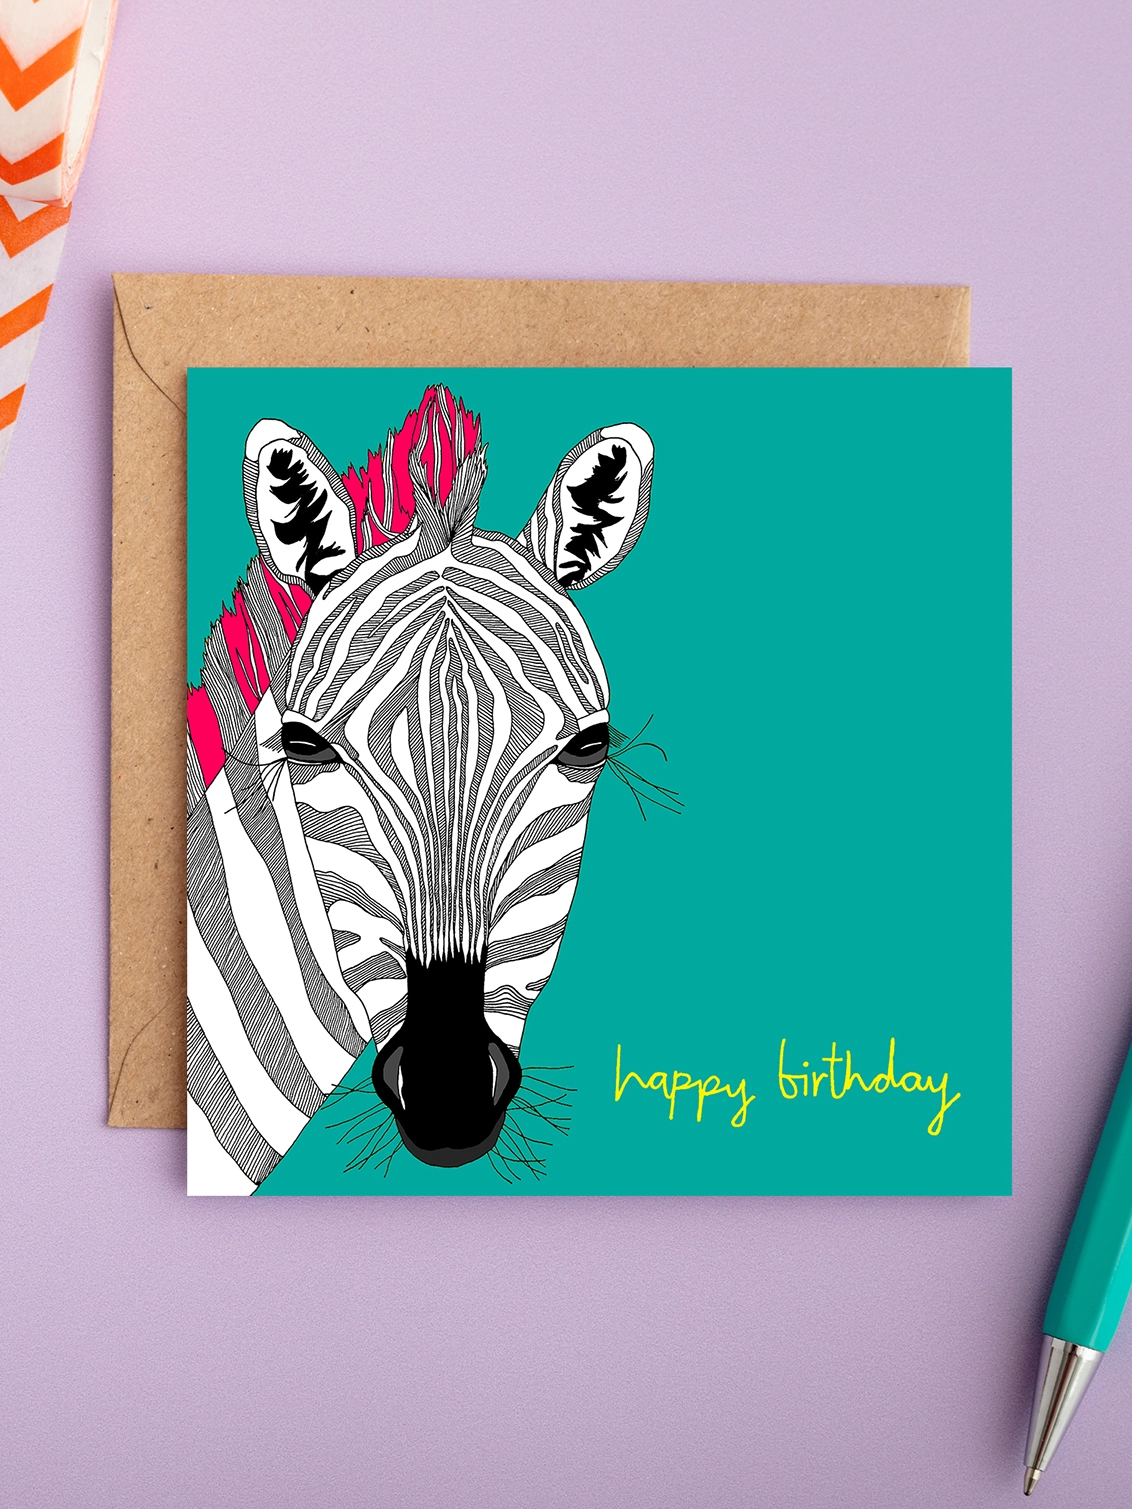 Colourful birthday card featuring a zebra